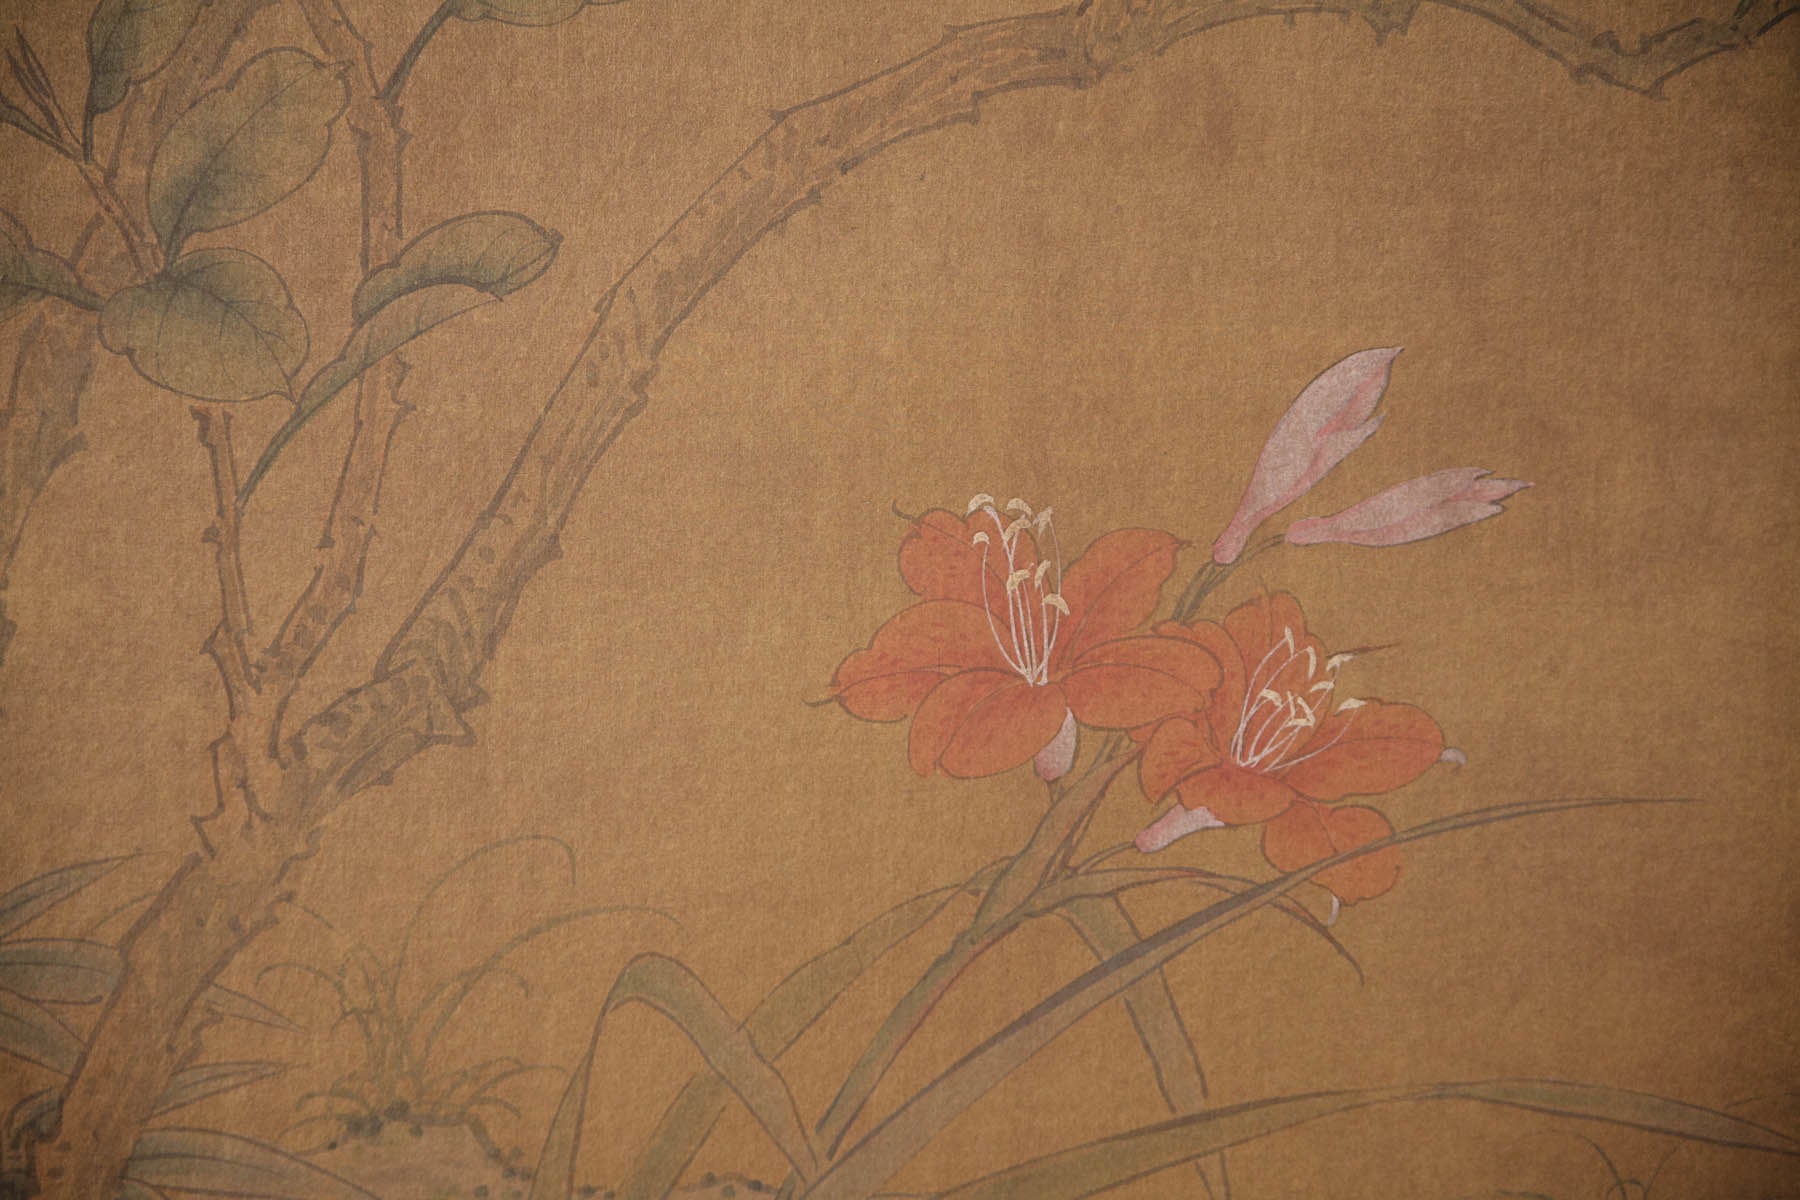 Lawrence & Scott Sung Tze-Chin "Joyous Spring 2" Ink on Silk 4-Panel Screen (6 ft x 6 ft)